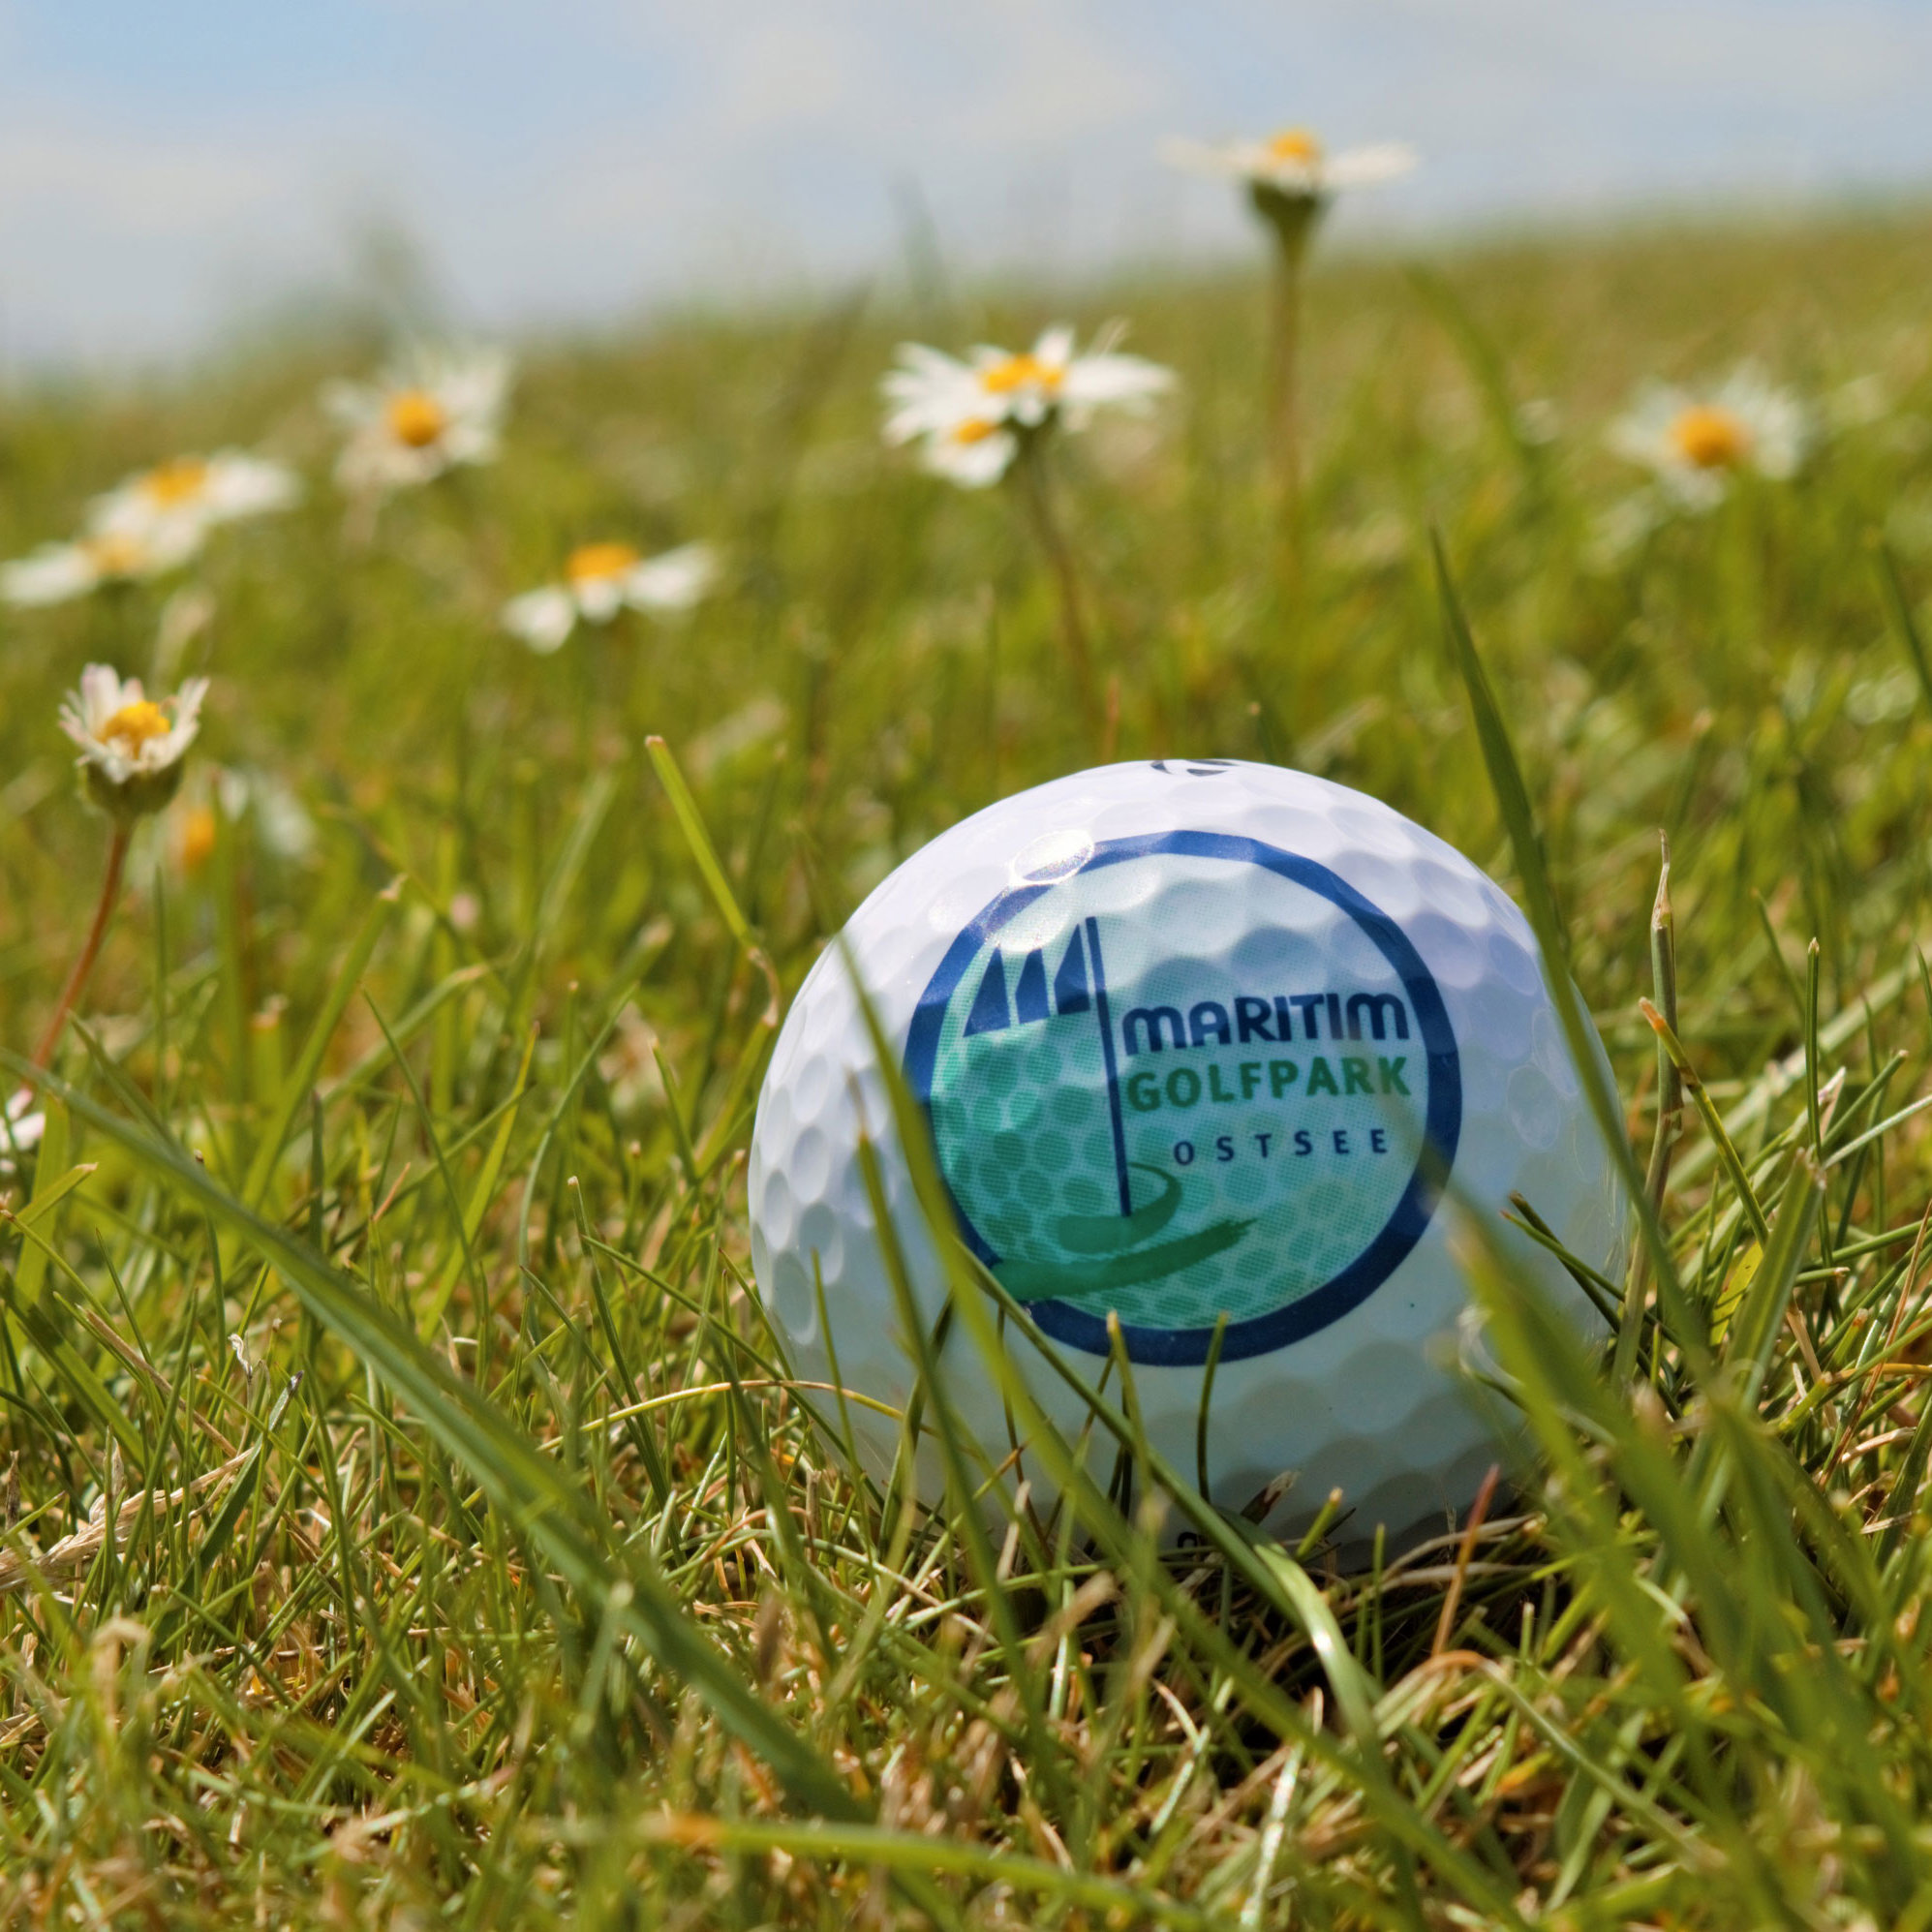 Golf ball | Maritim Golfpark Ostsee